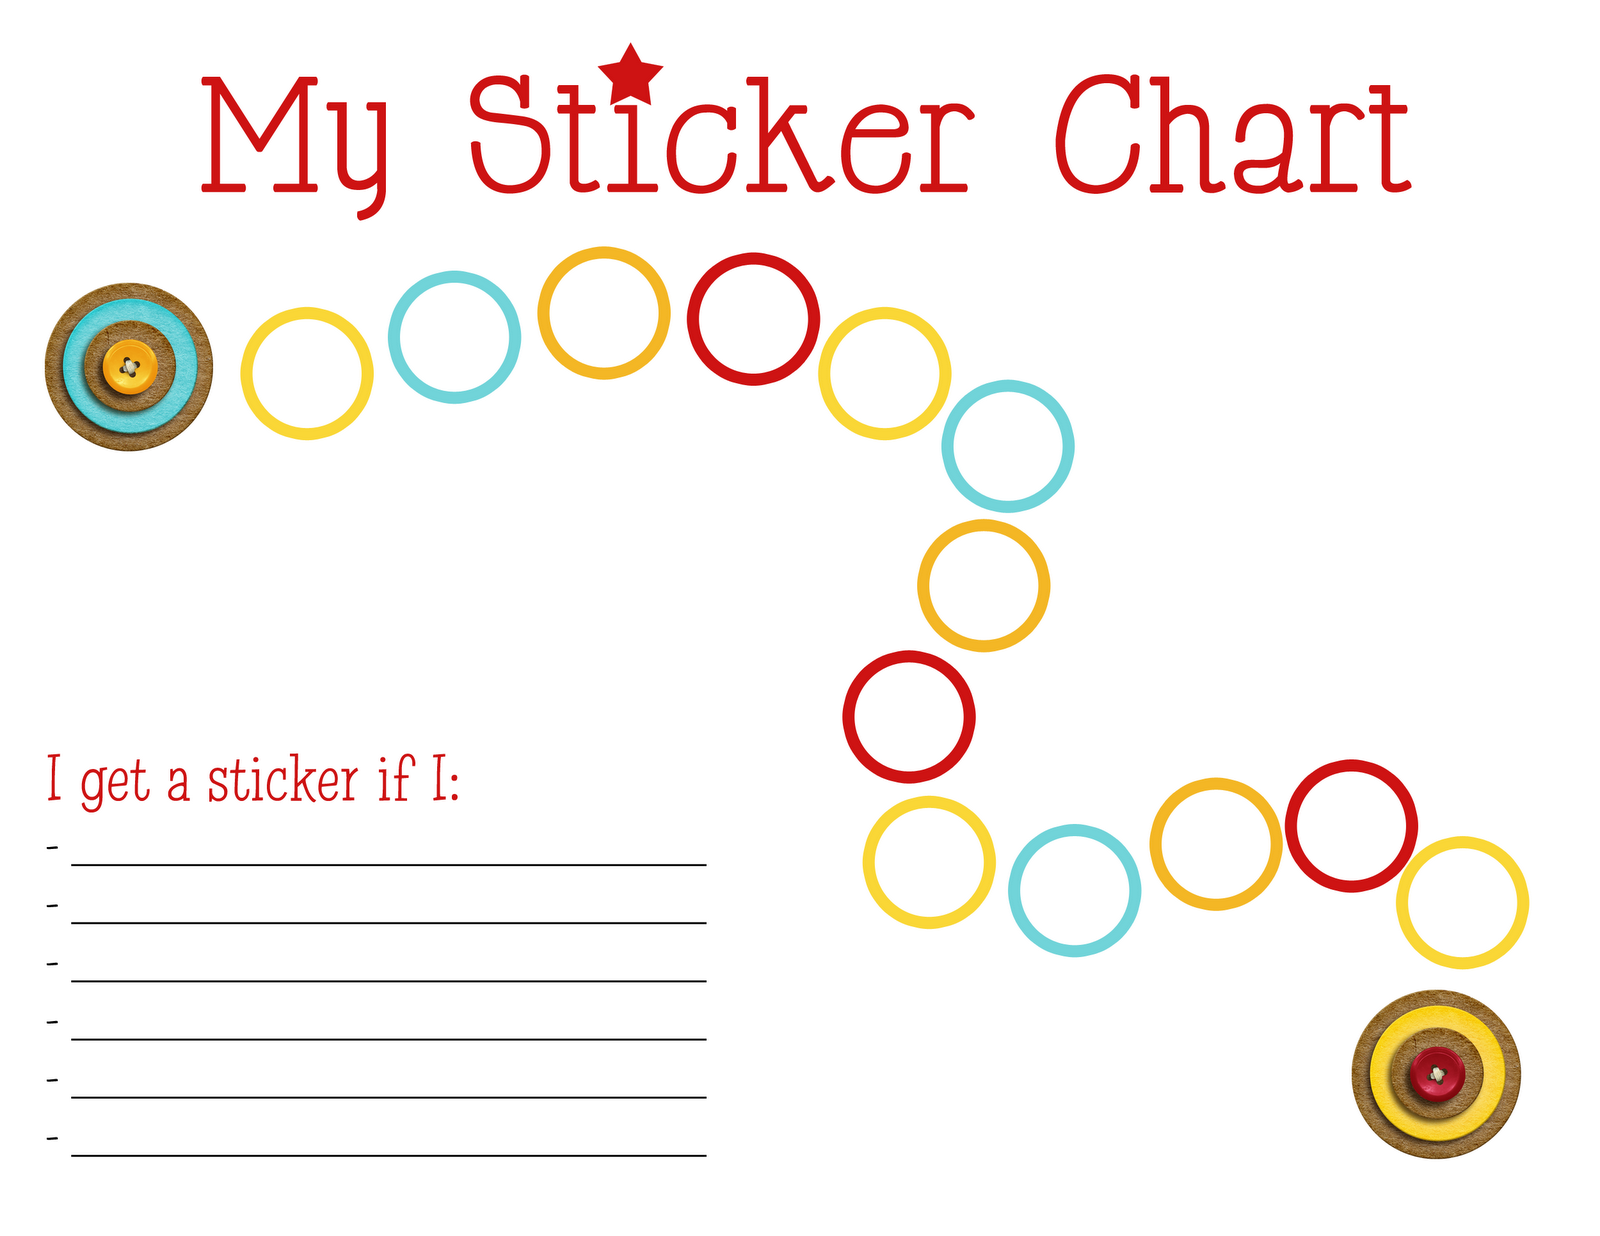 reward-sticker-chart-printable-customize-and-print